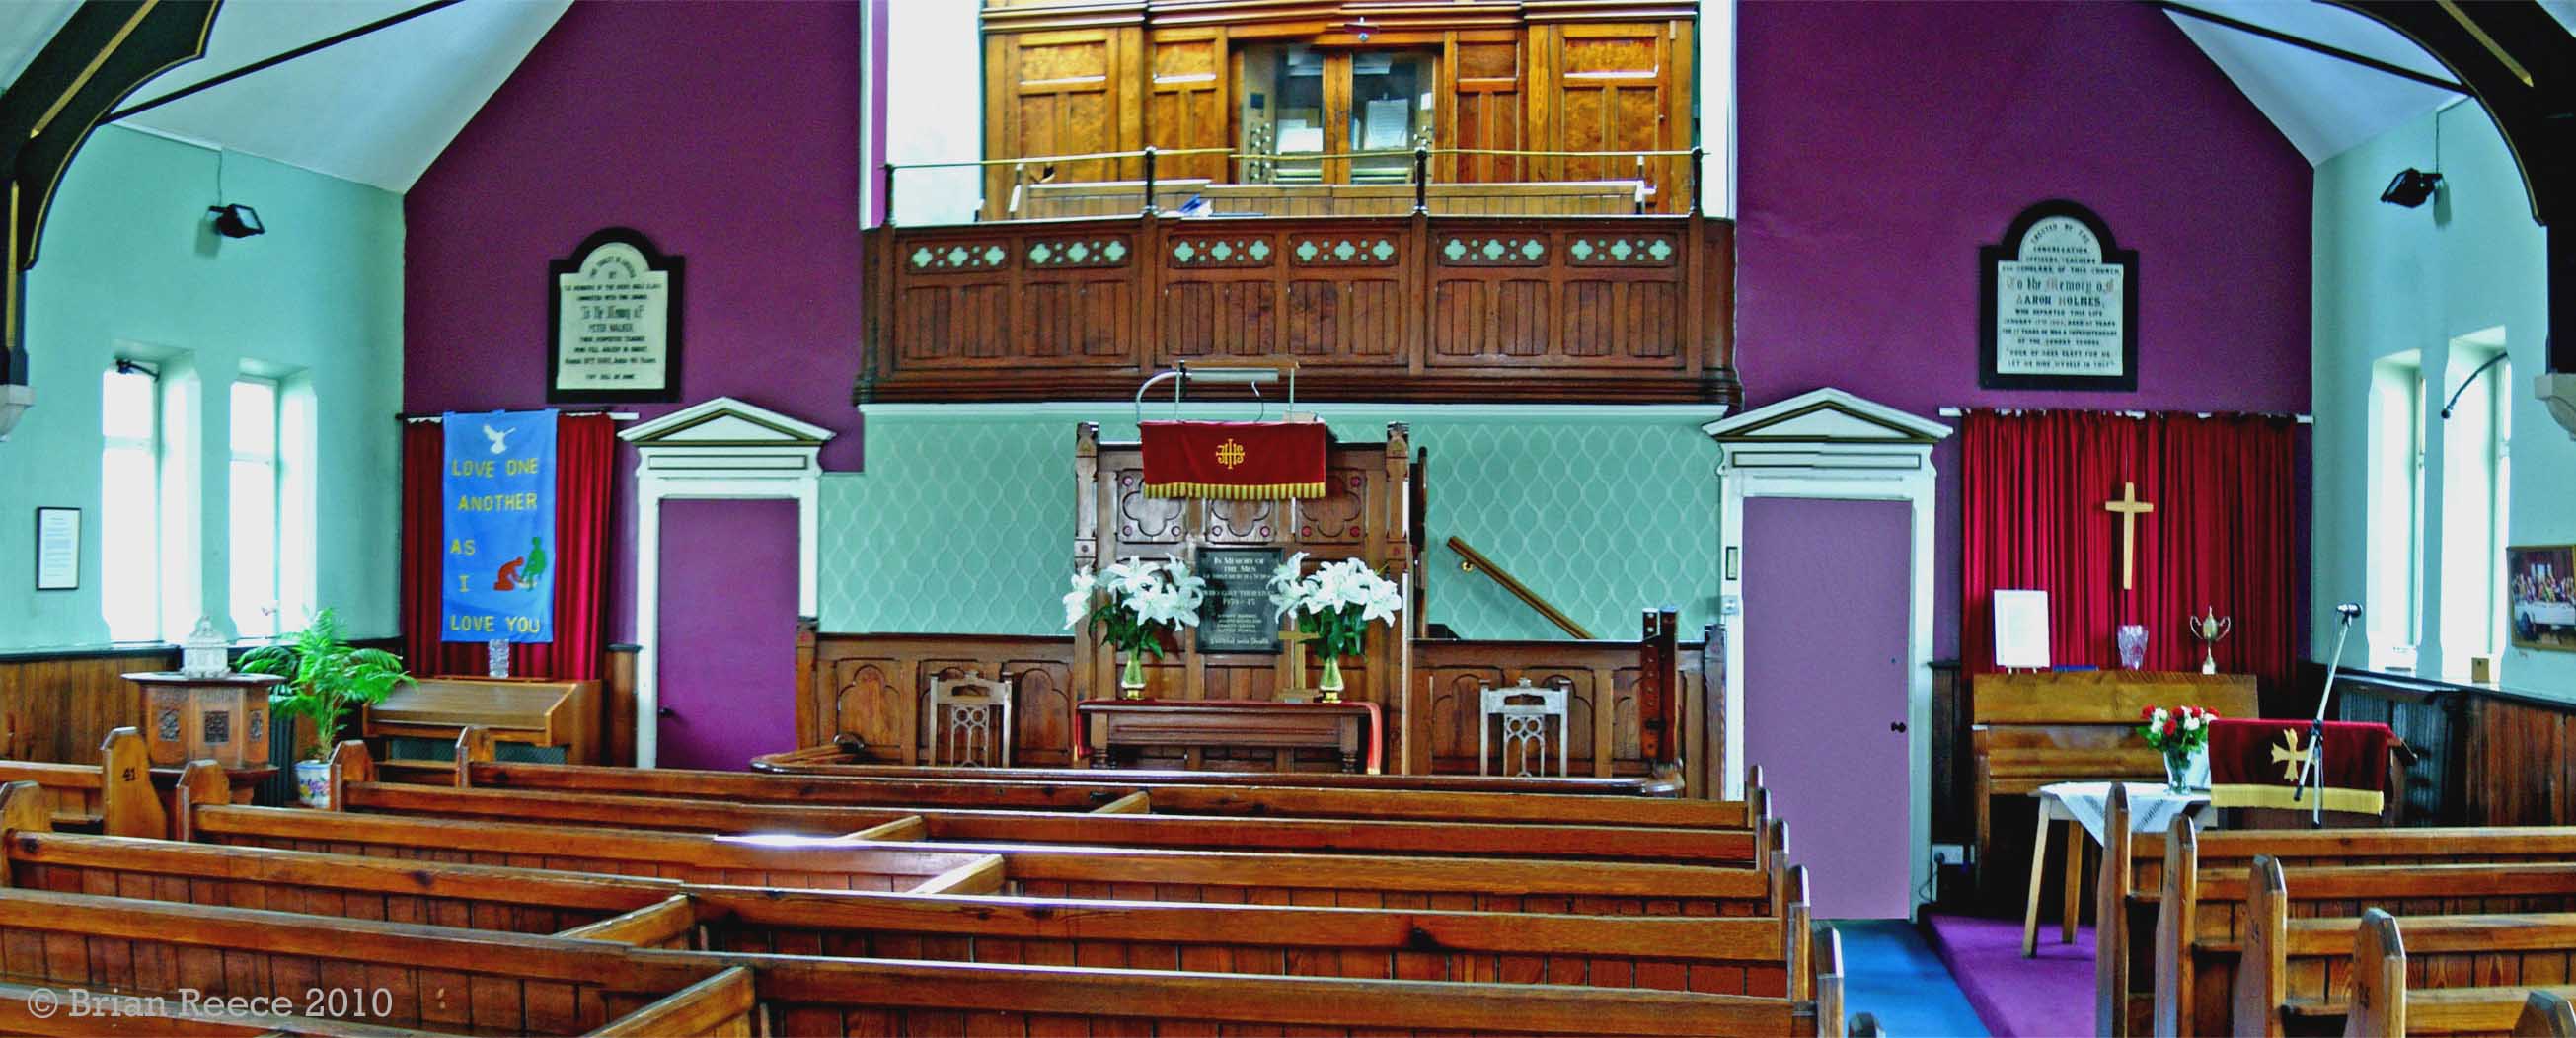 The Interior of Cleggs Lane Methodist Church, Little Hulton